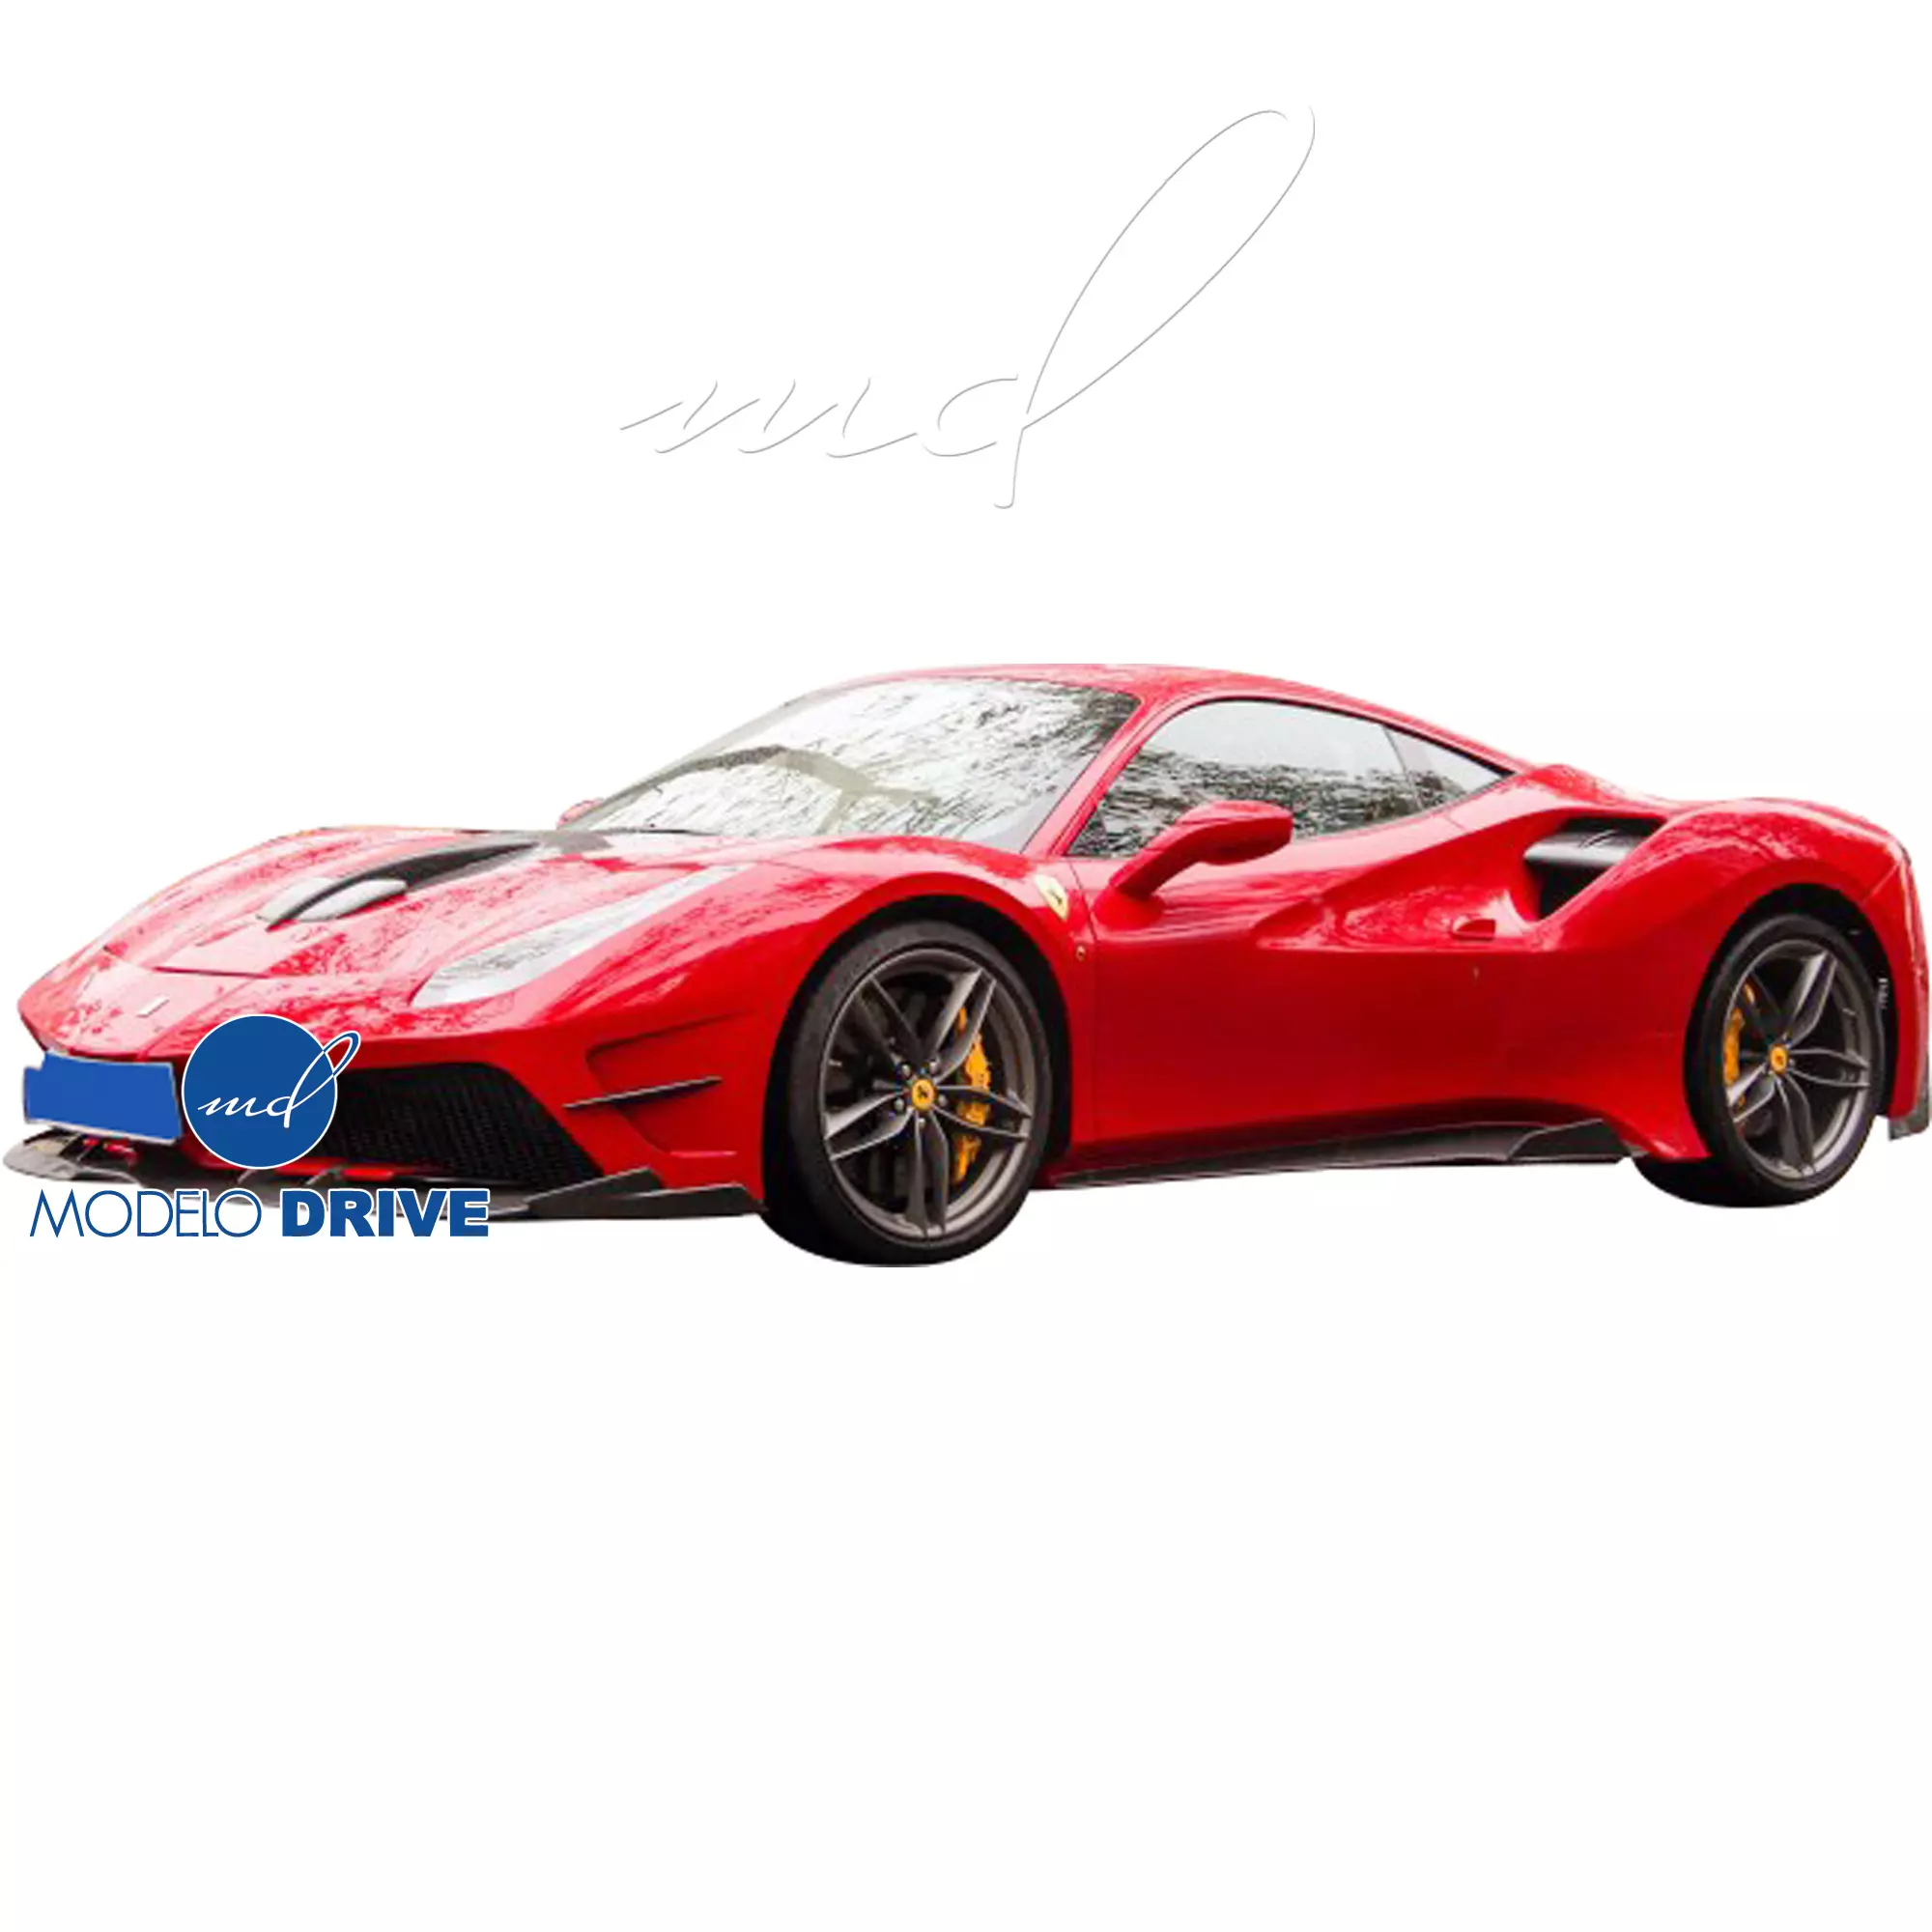 ModeloDrive Partial Carbon Fiber MDES Body Kit > Ferrari 488 GTB F142M 2016-2019 - Image 29